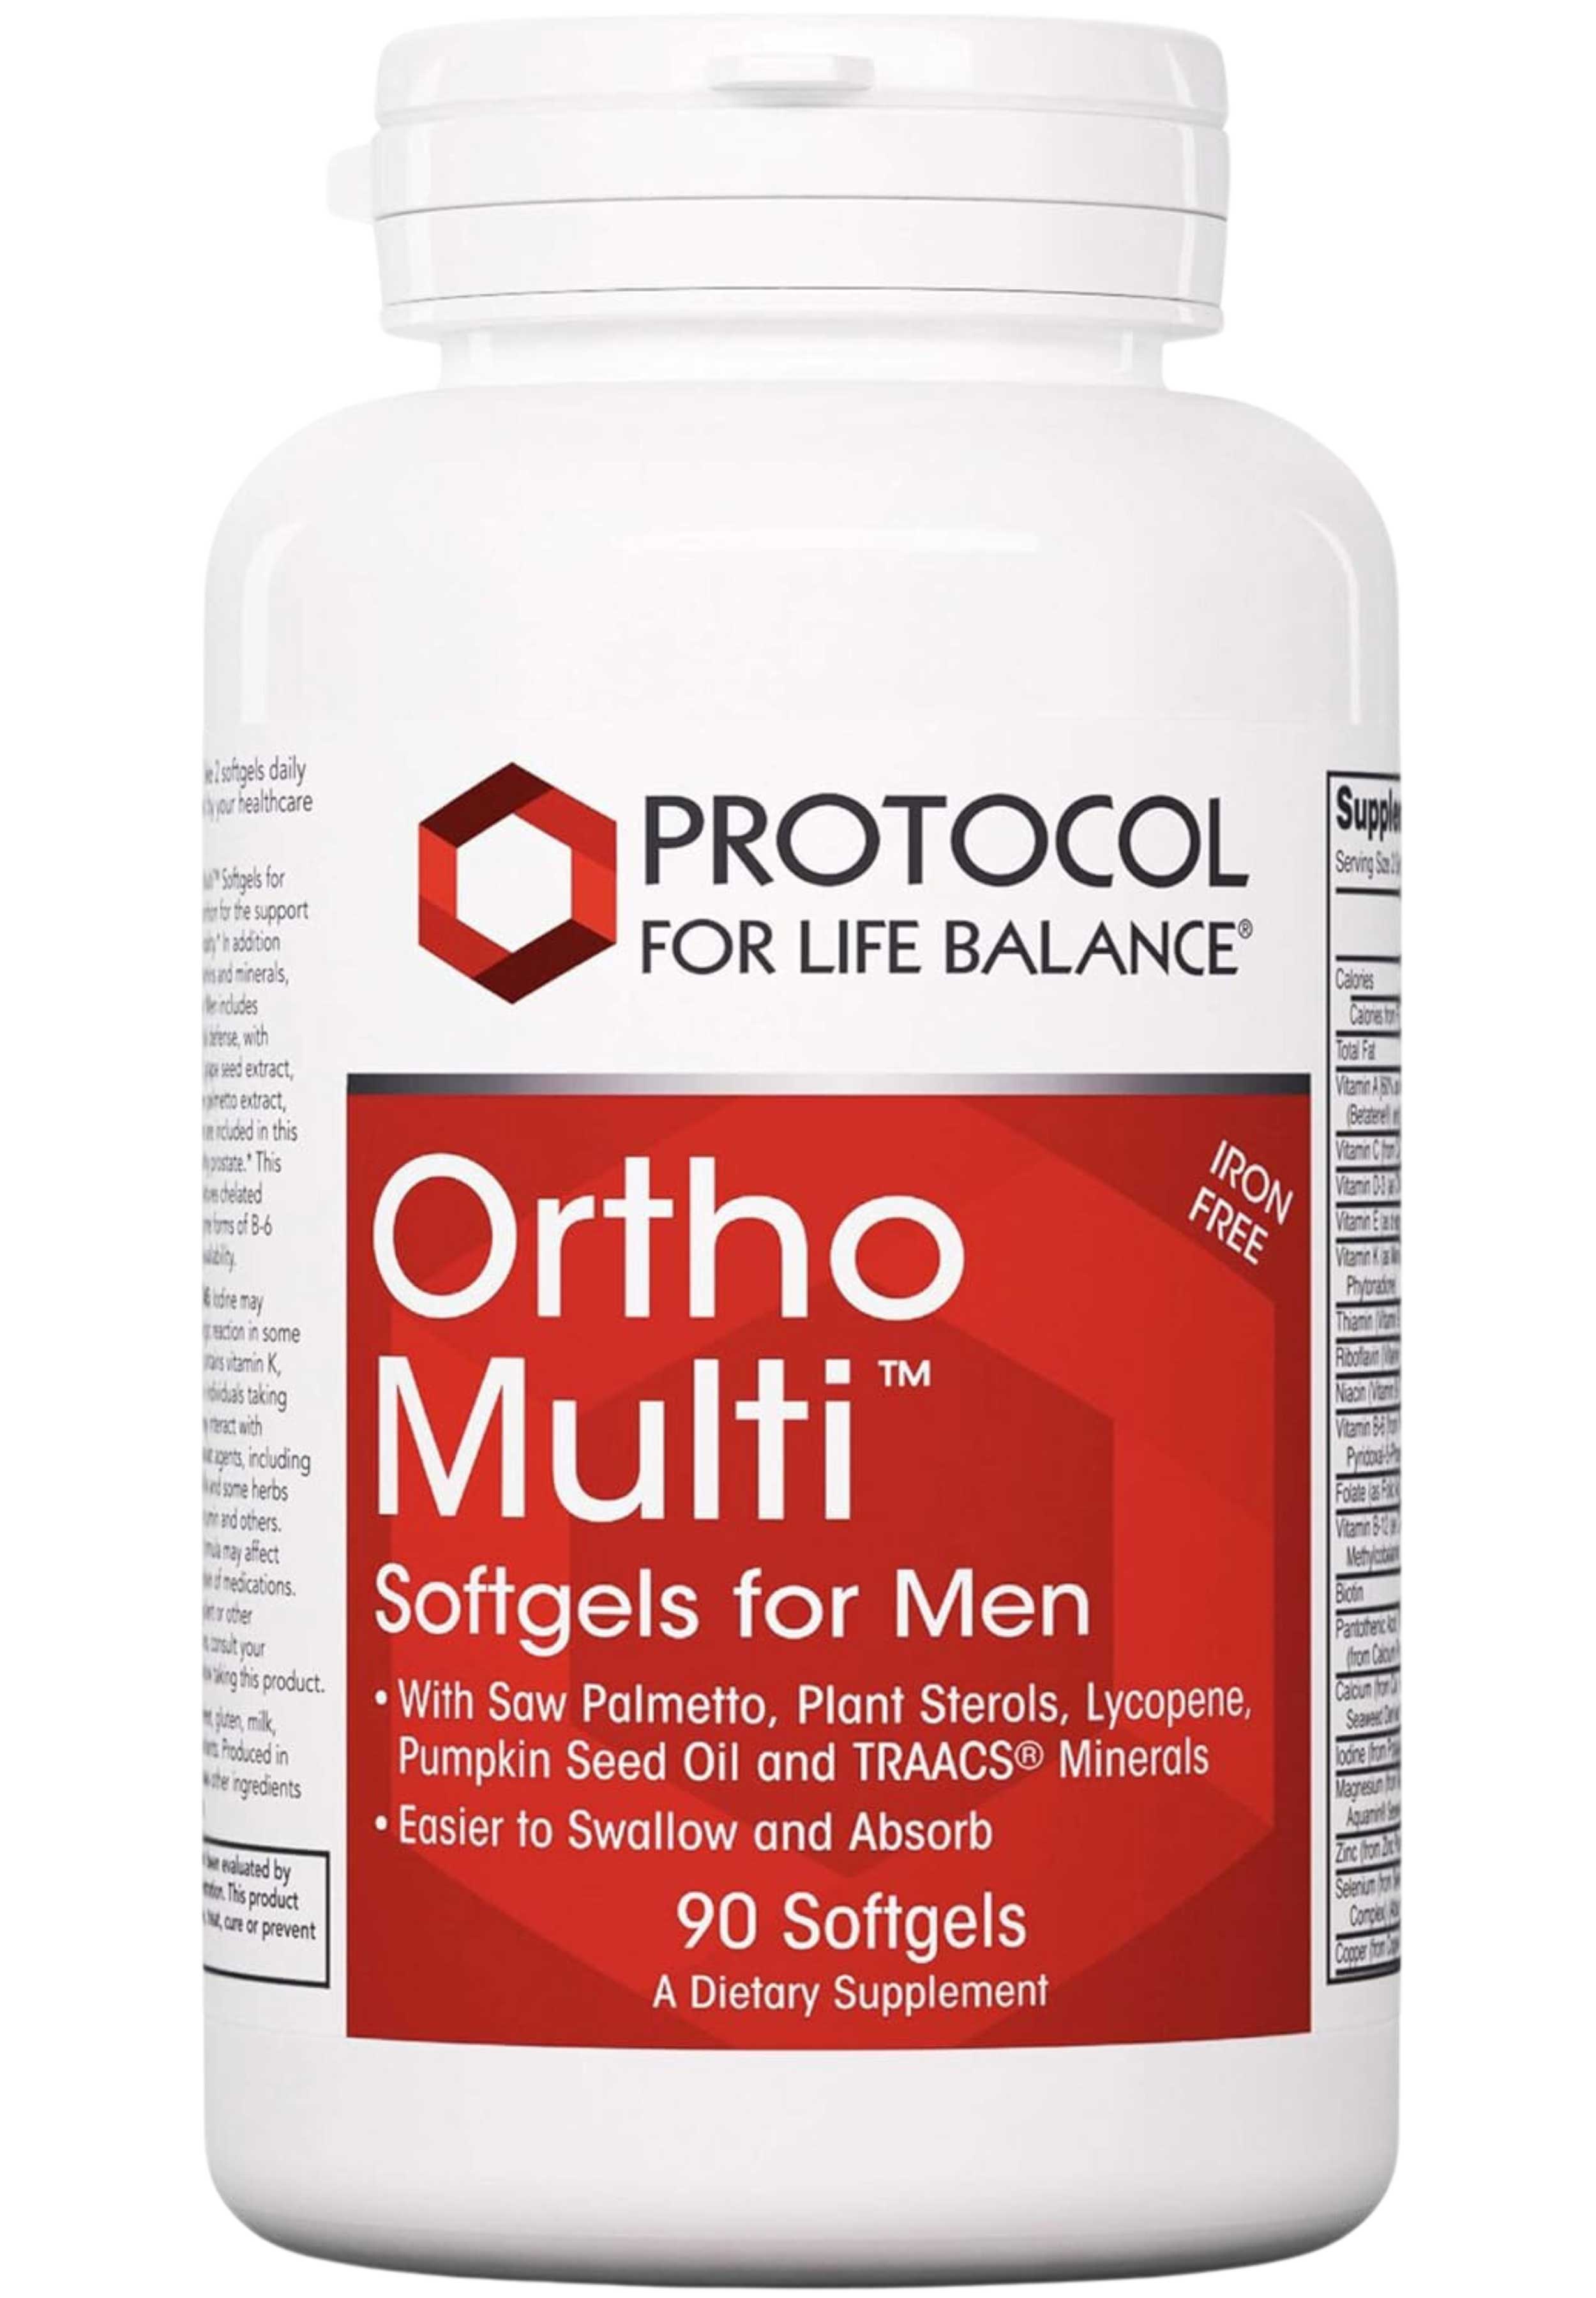 Protocol for Life Balance Ortho Multi for Men